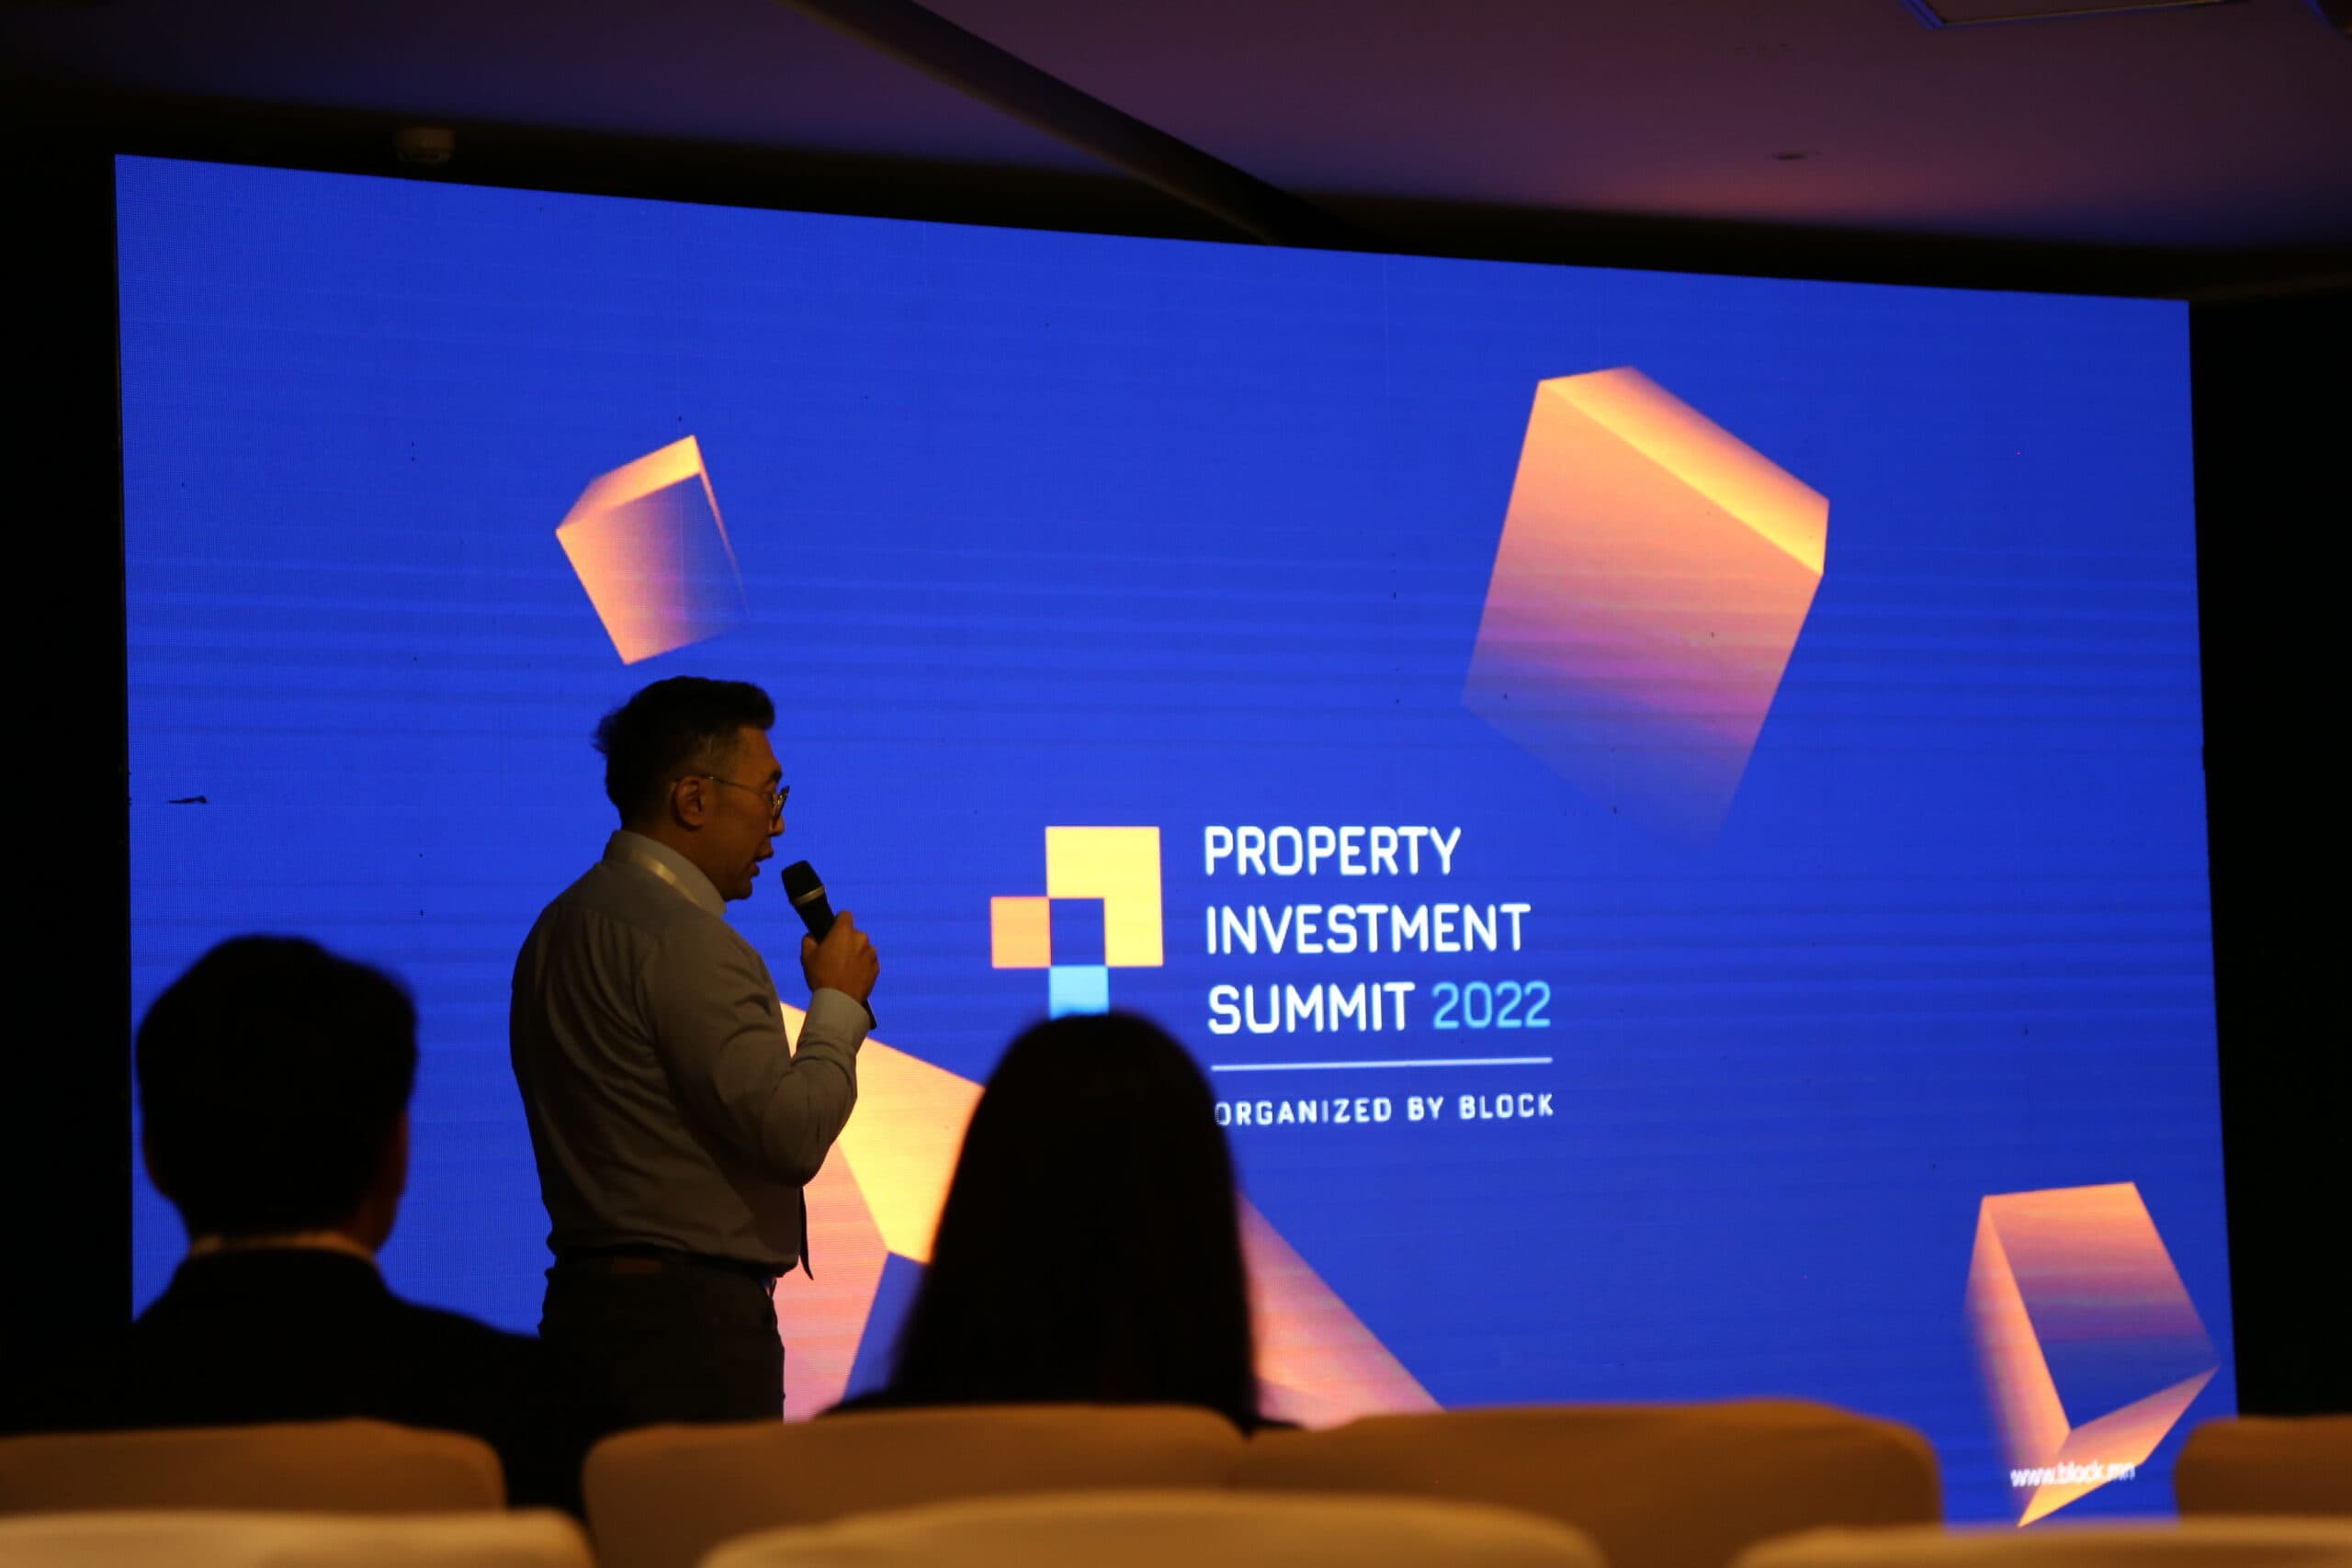 Property Investment Summit 2022 зохион байгуулагдлаа